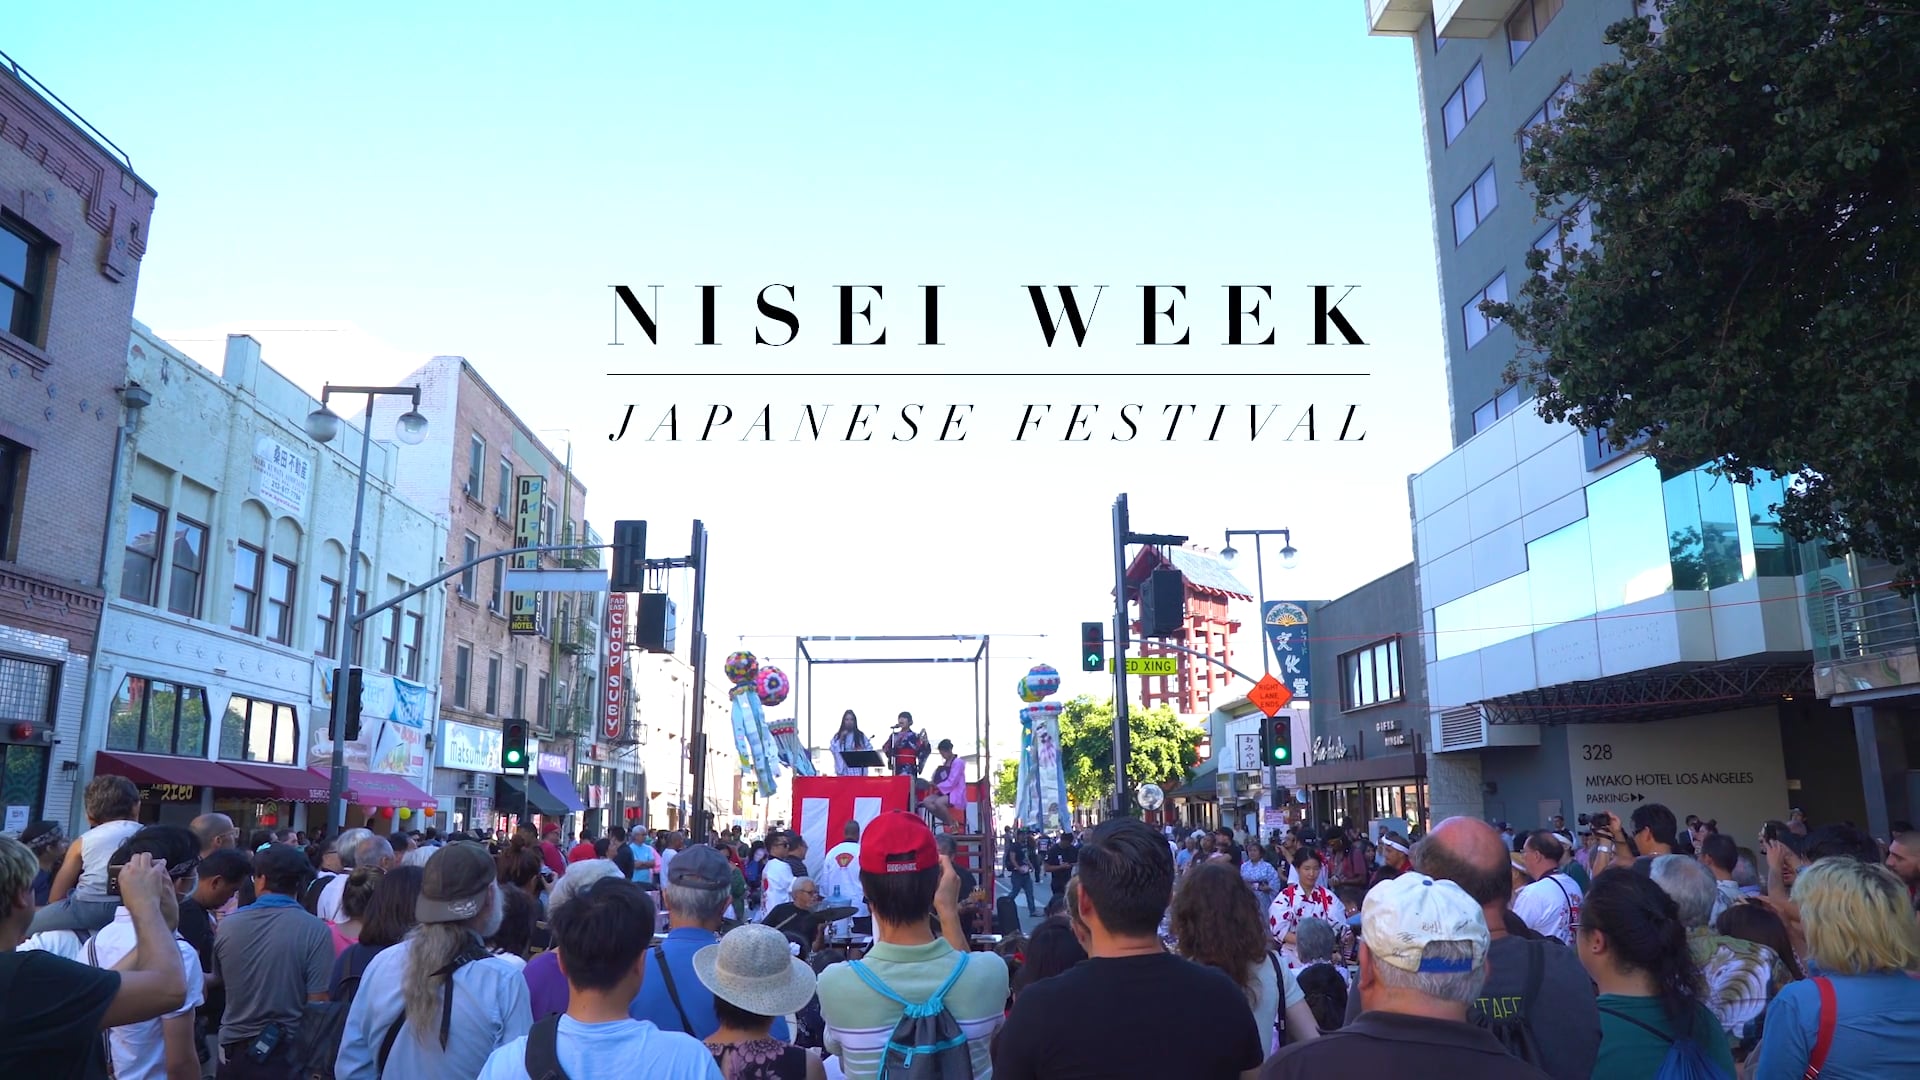 Nisei Week Foundation on Vimeo